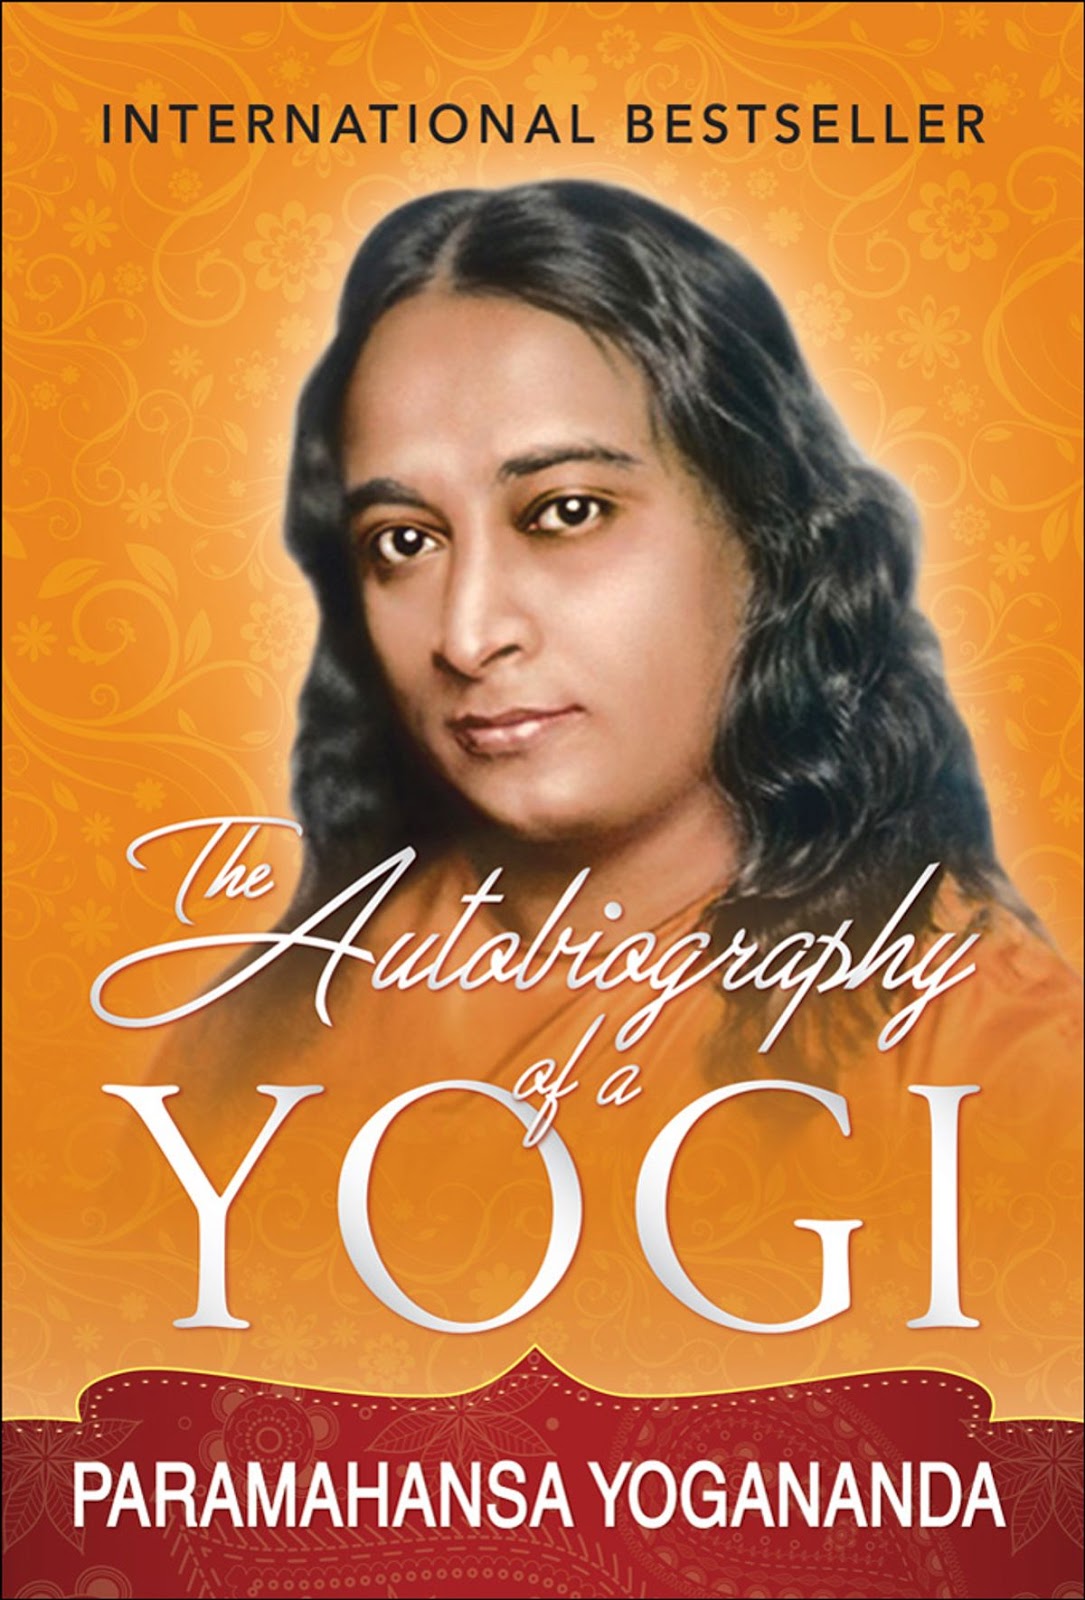 autobiography of a yogi book free download